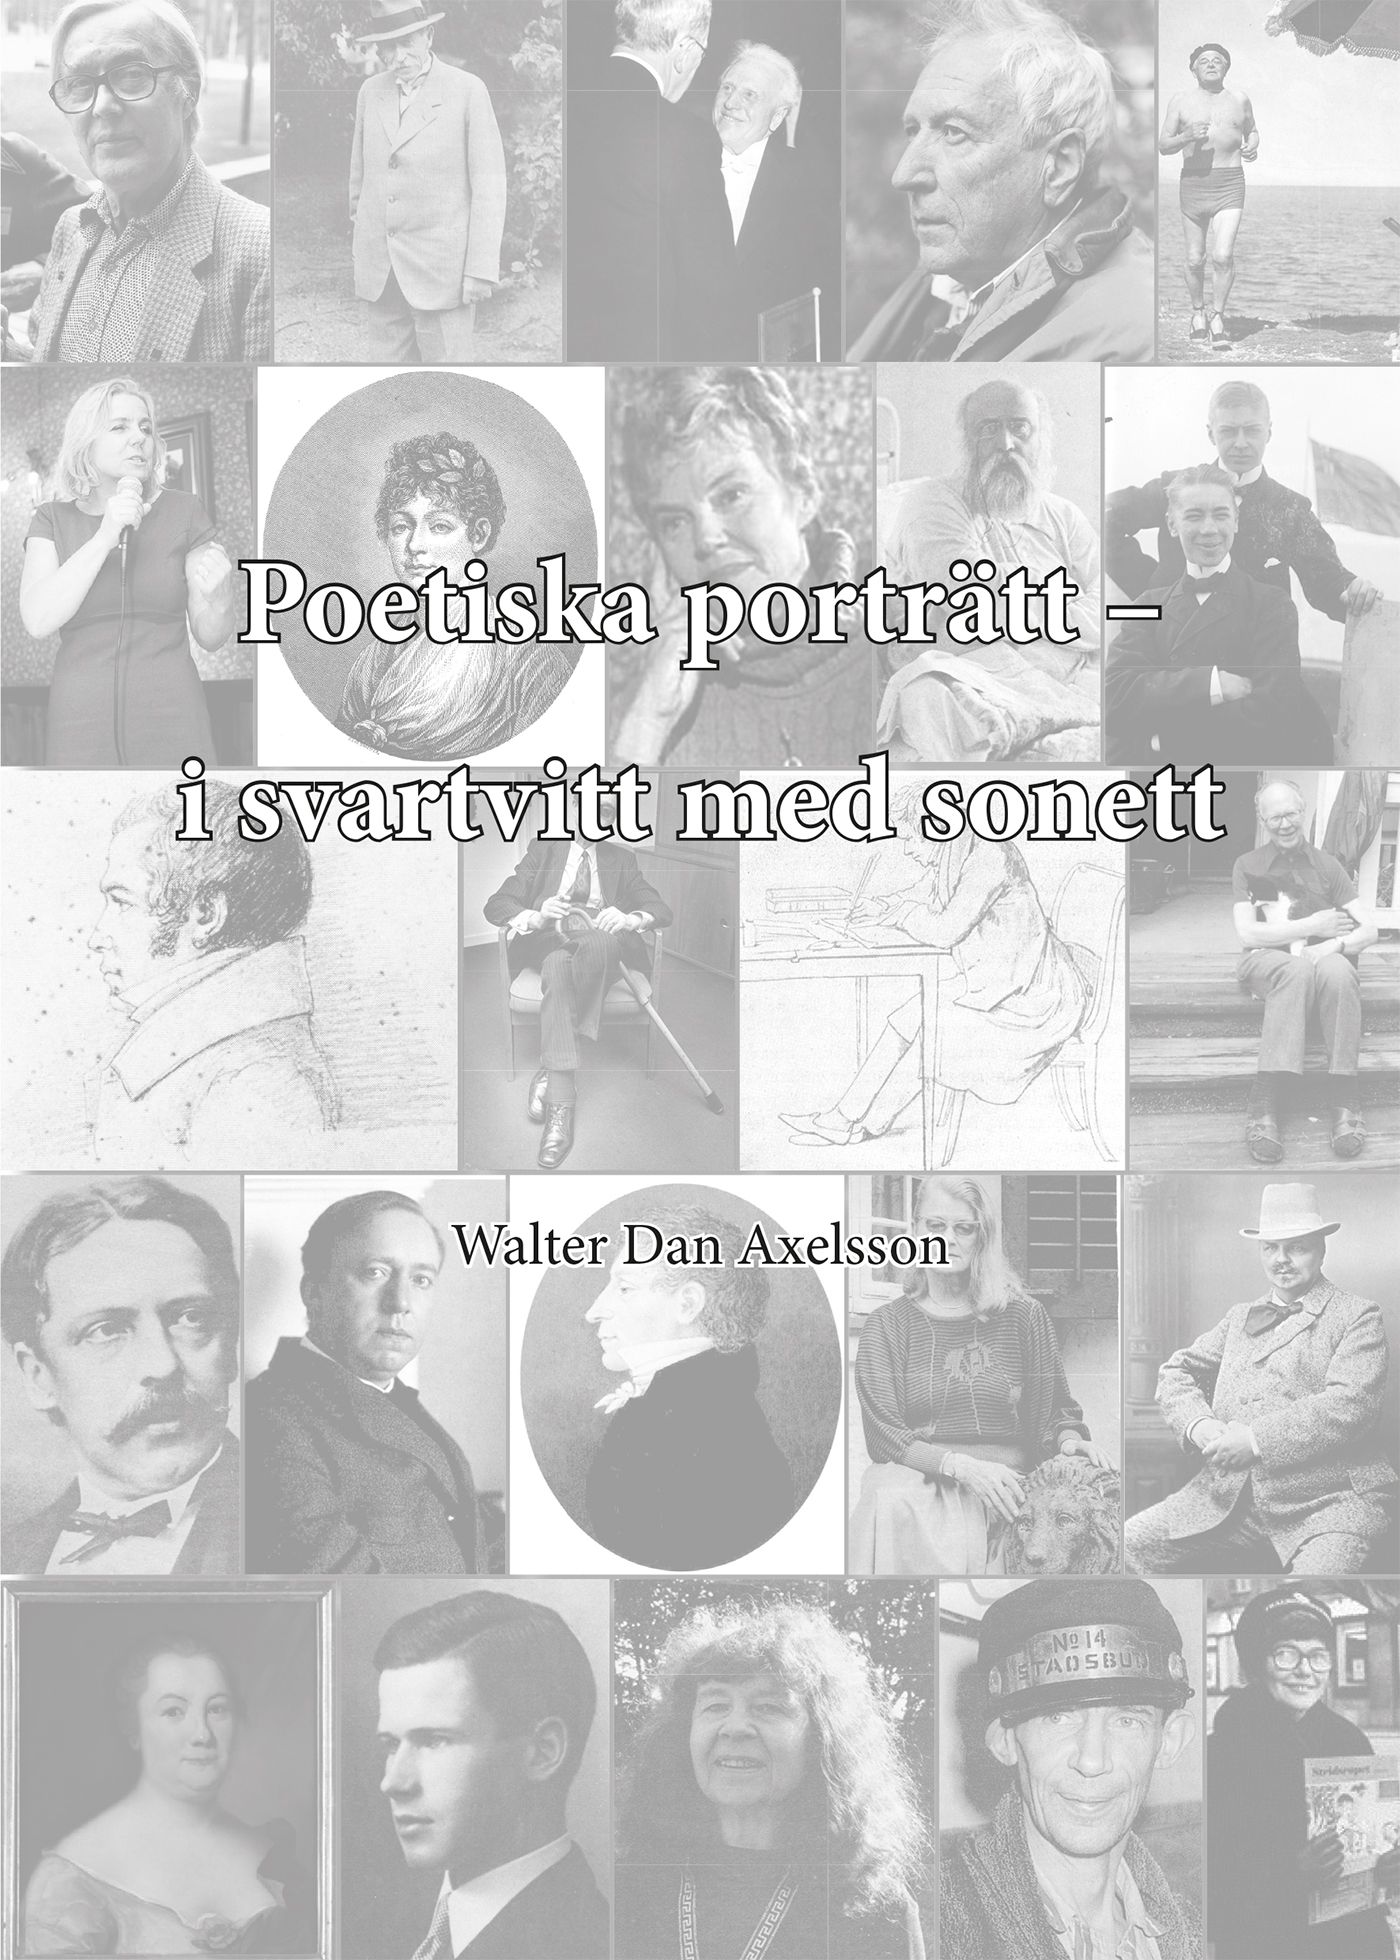 Poetiska porträtt – i svartvitt med sonett, e-bok av Walter Dan Axelsson